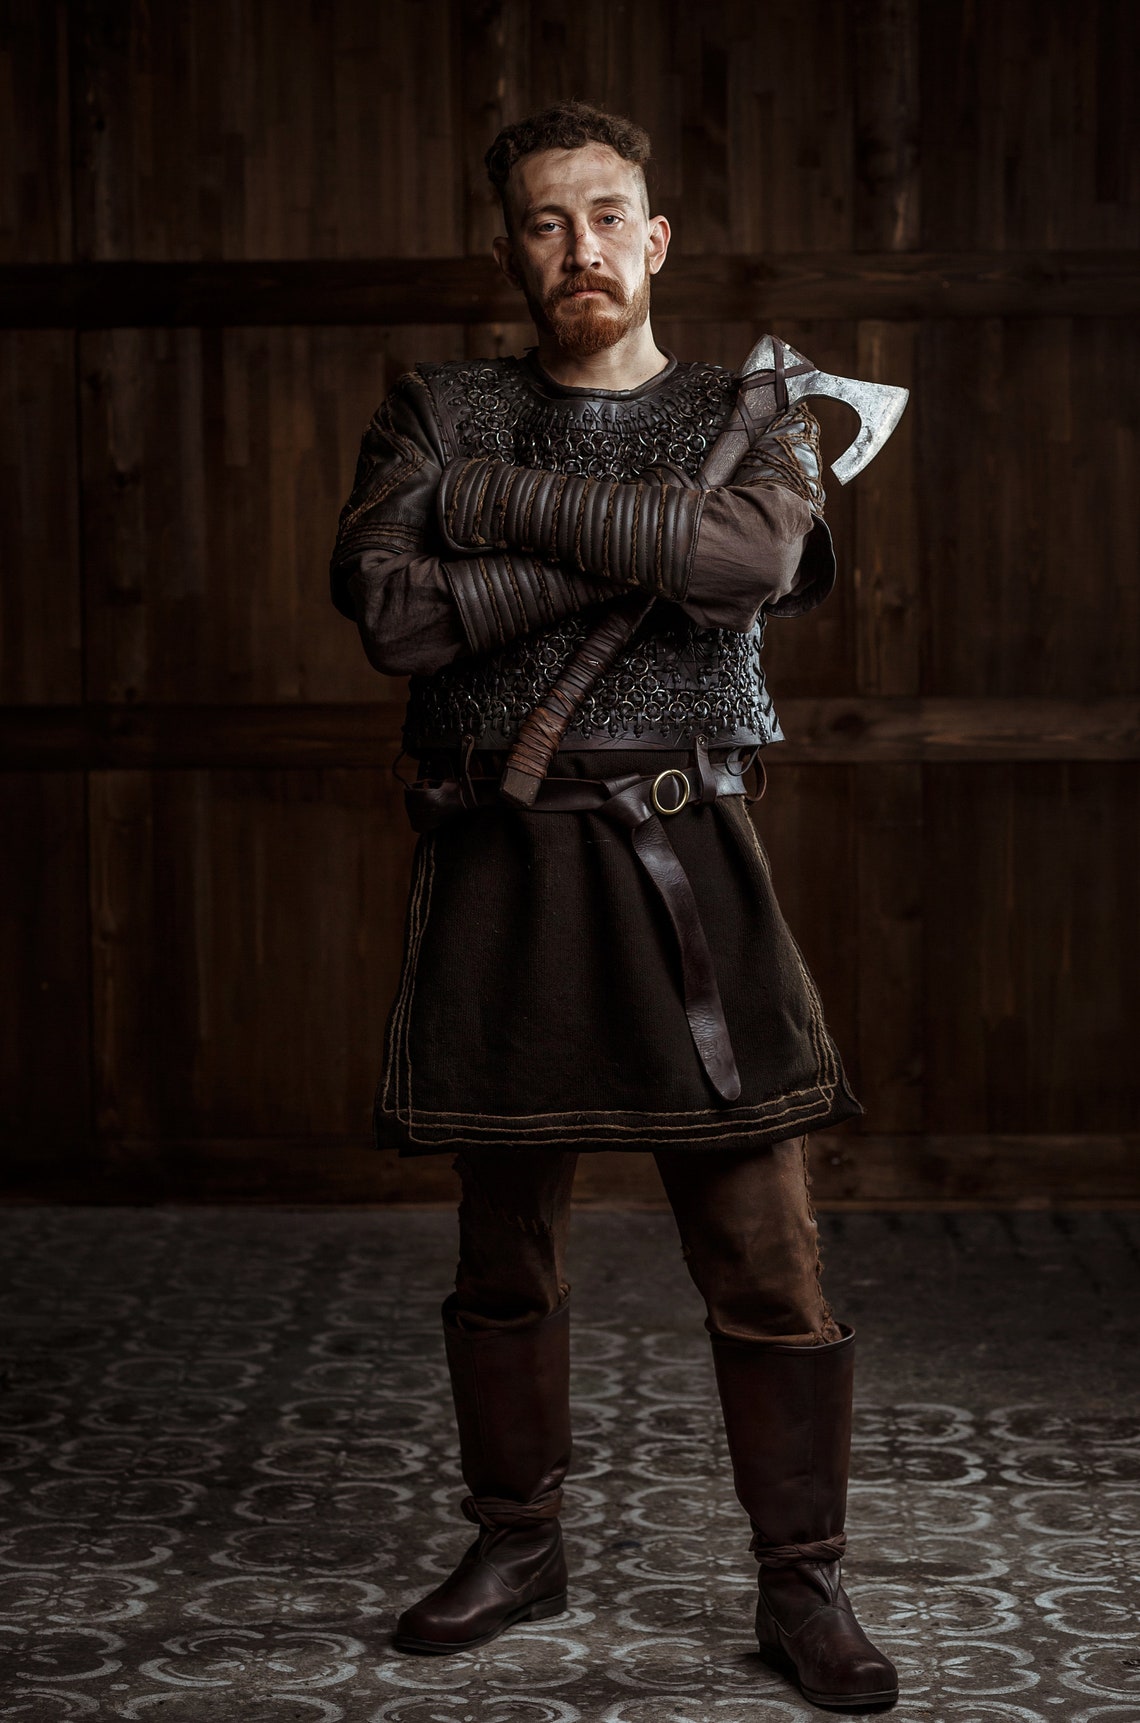 Ragnar armor from Vikings season 2 exact copy leather vest | Etsy